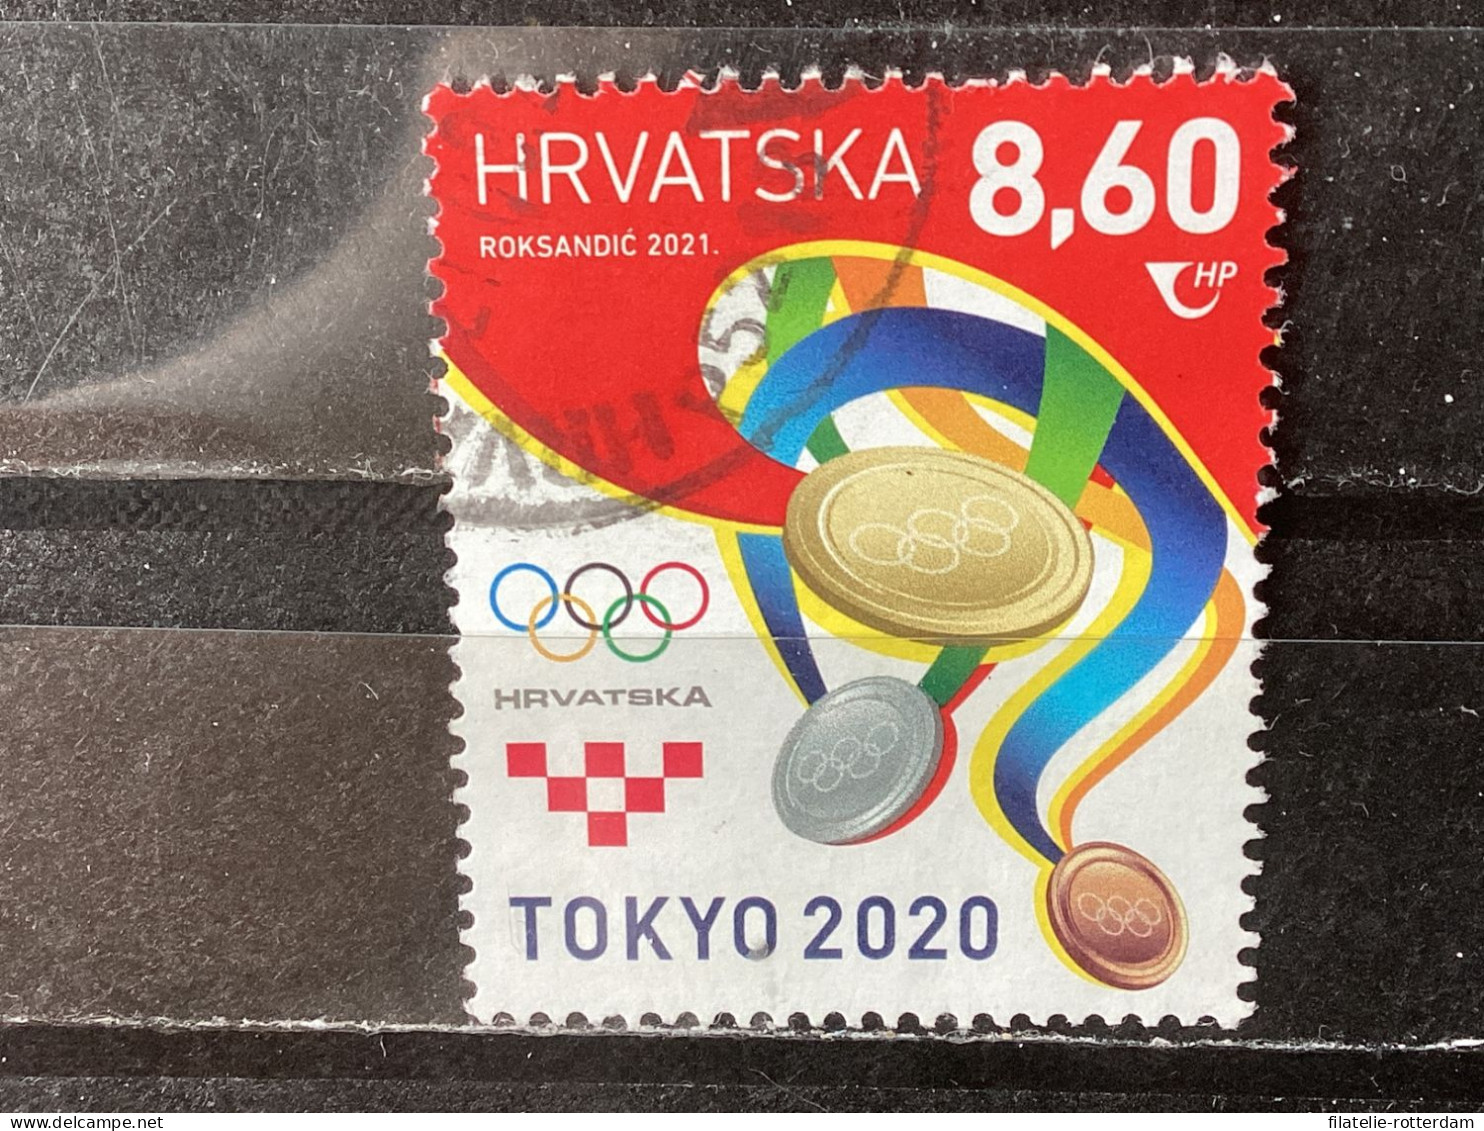 Croatia / Kroatië - Olympic Games (8.60) 2021 - Croazia